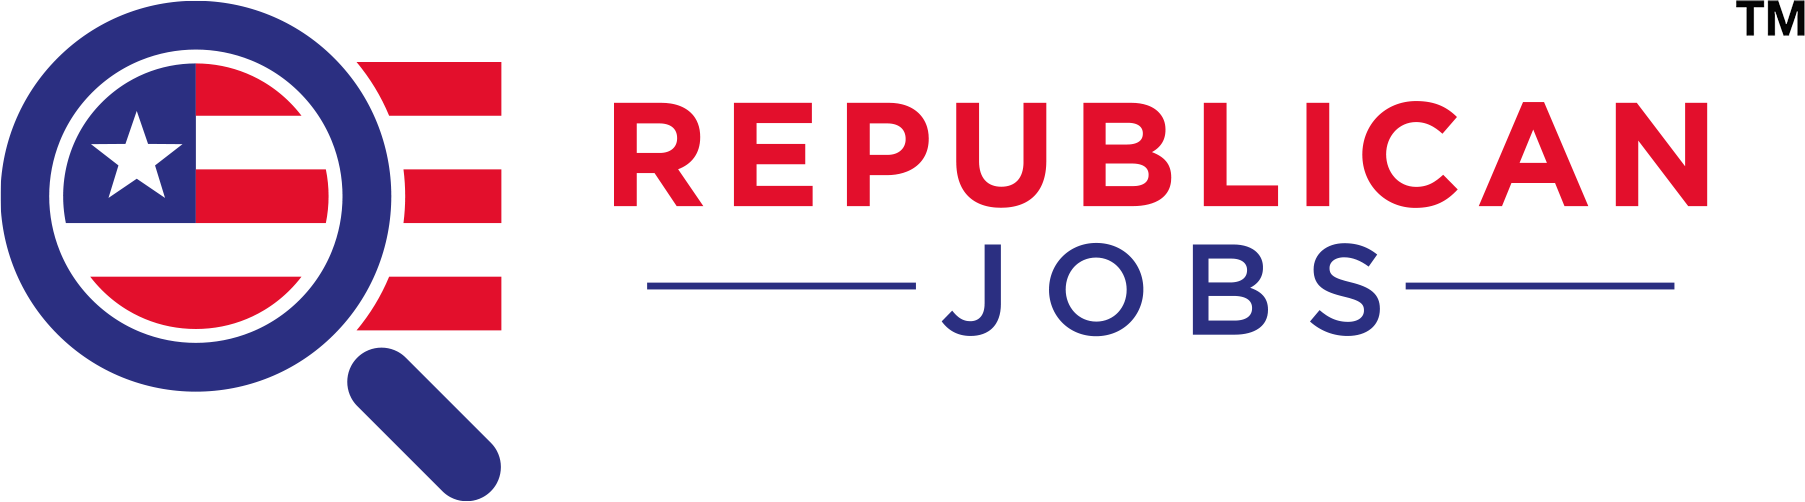 Republican jobs in Kenner Louisiana jobs